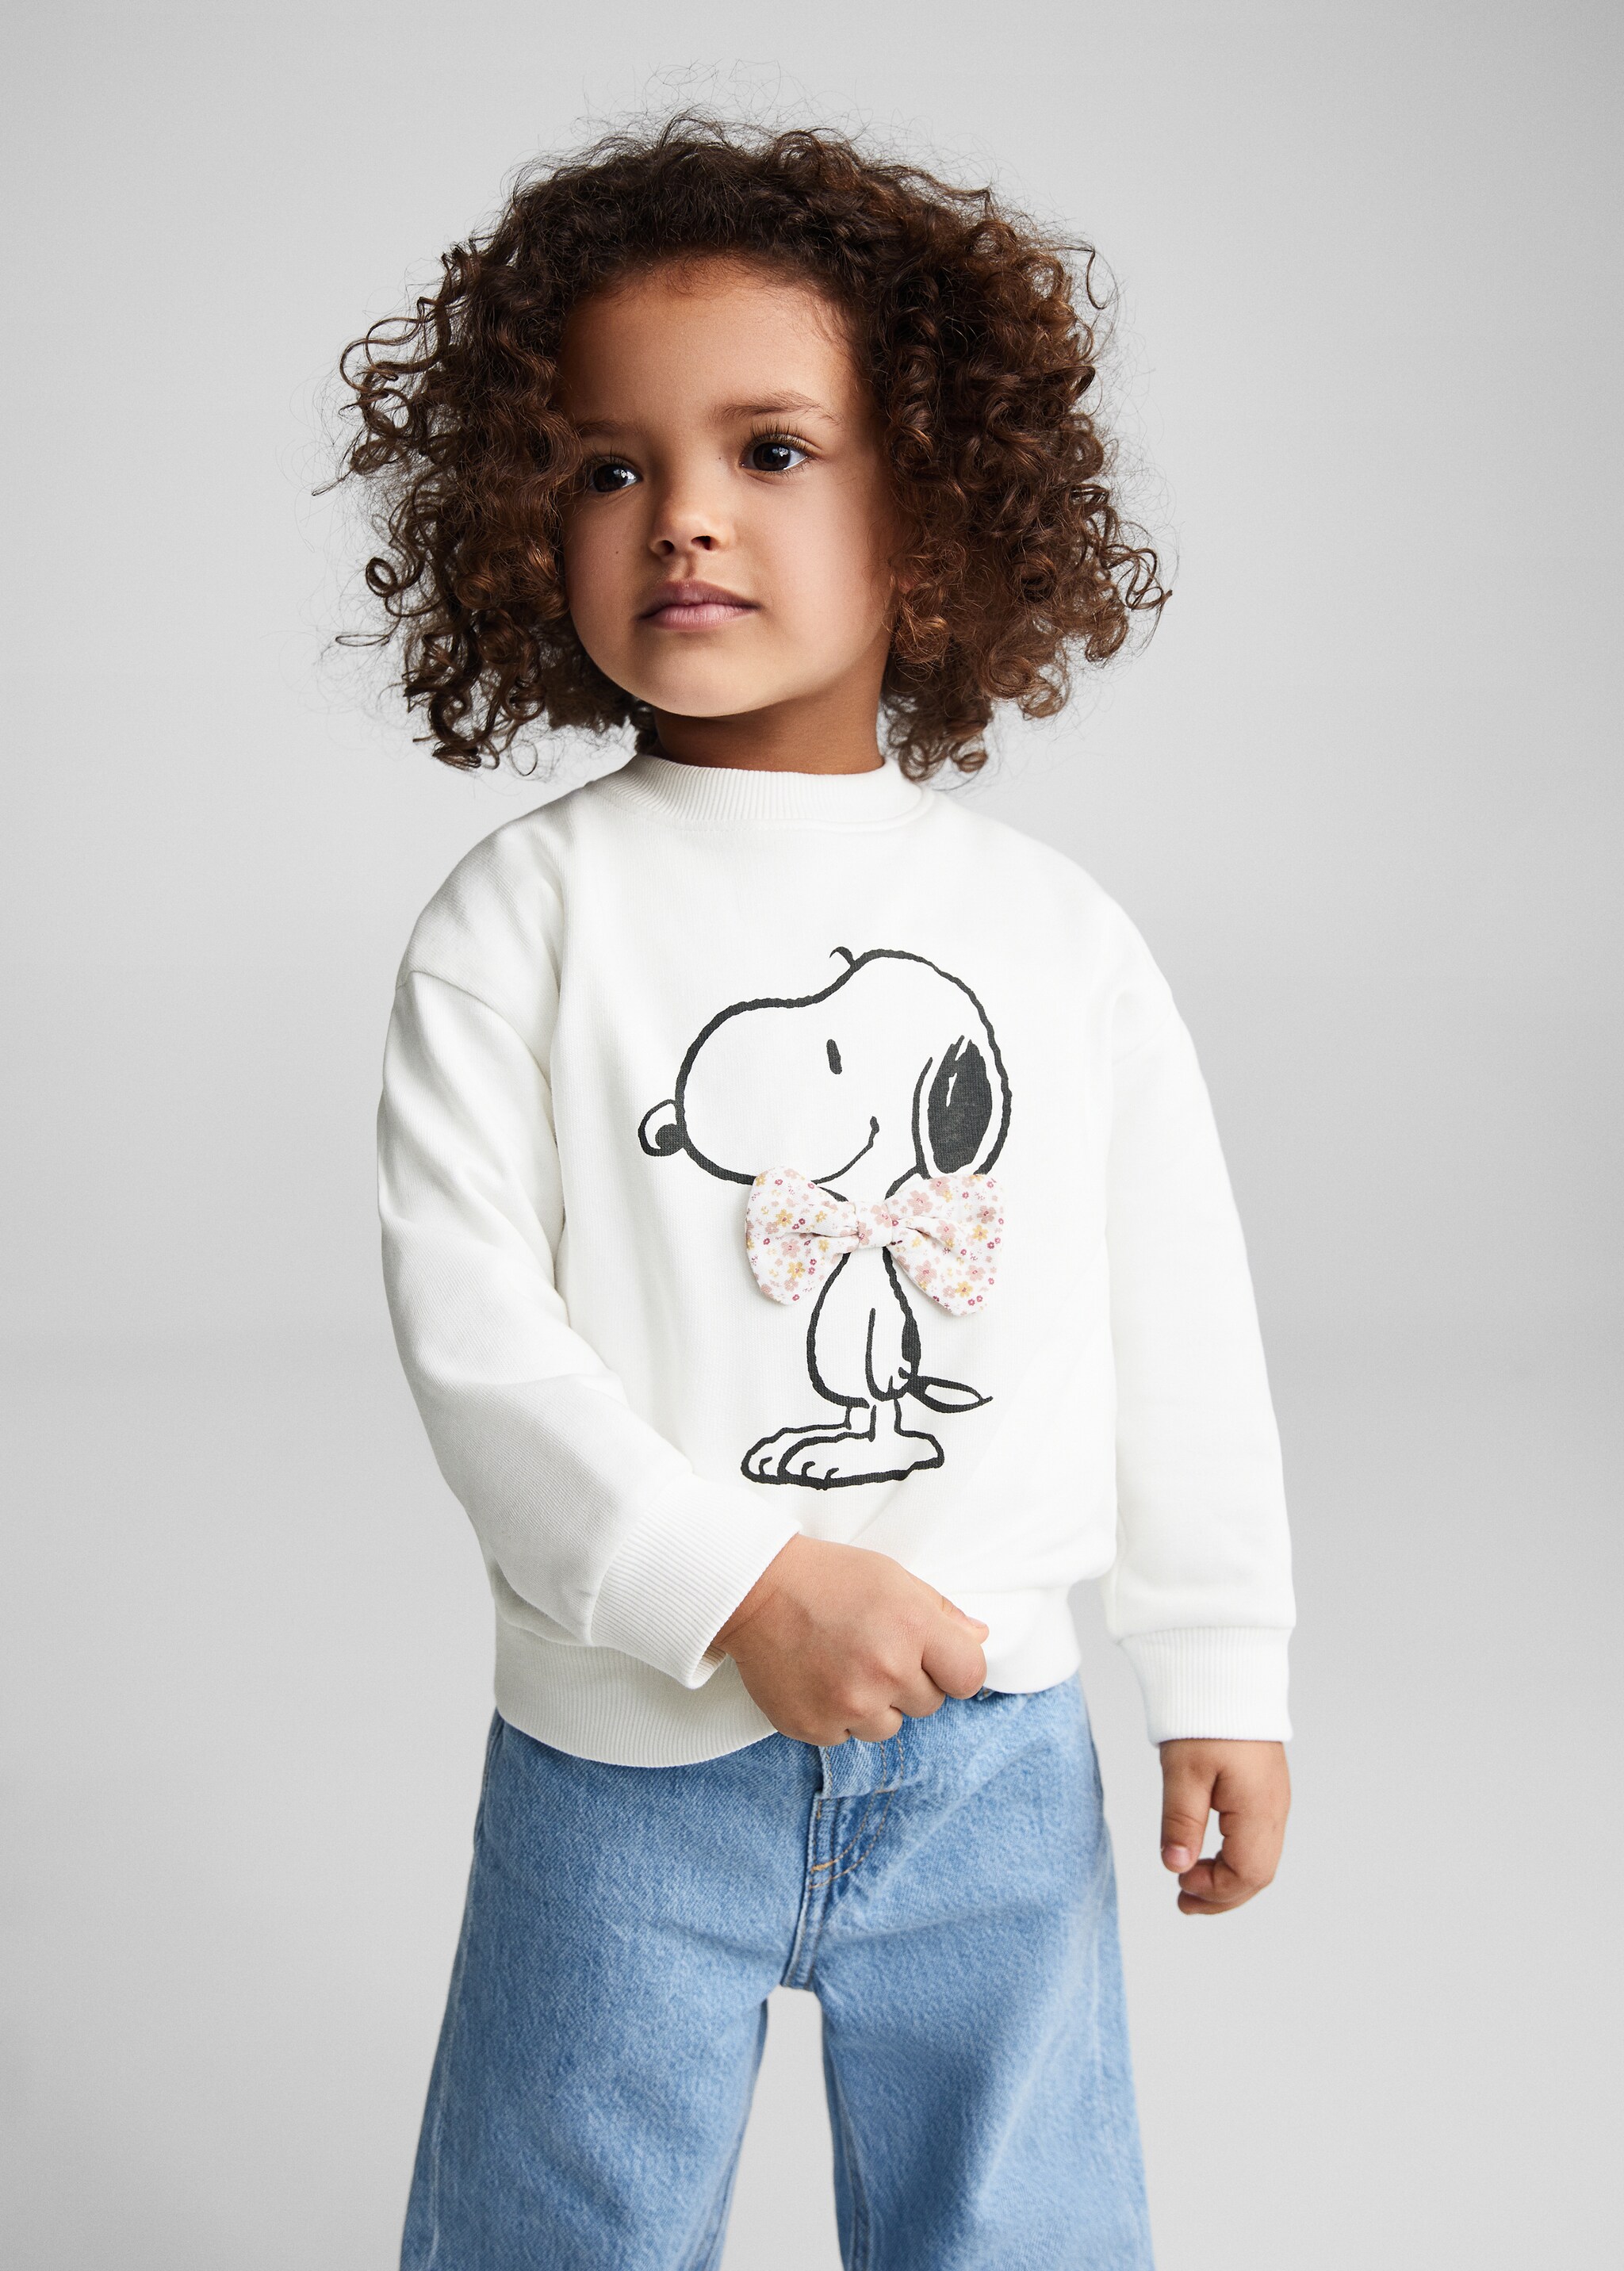 Snoopy cotton sweatshirt - Medium plane